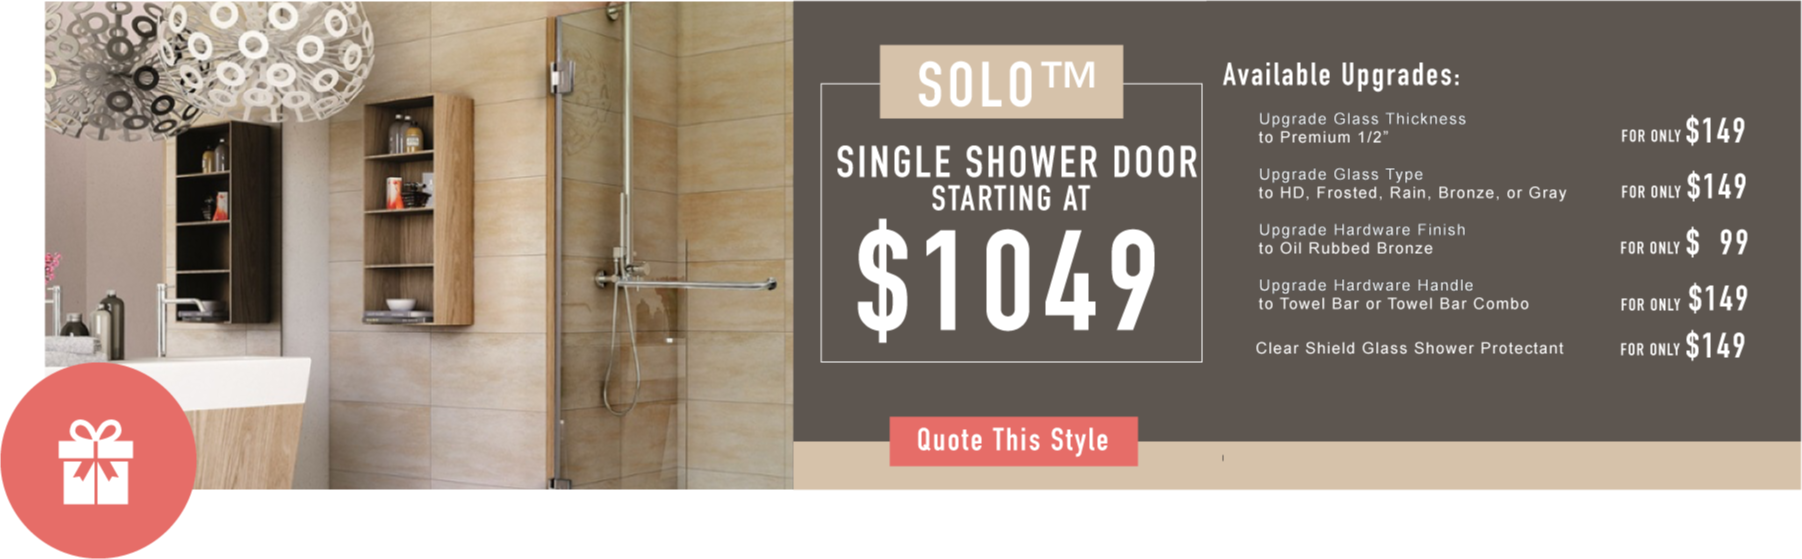 Single Shower Doors Promo